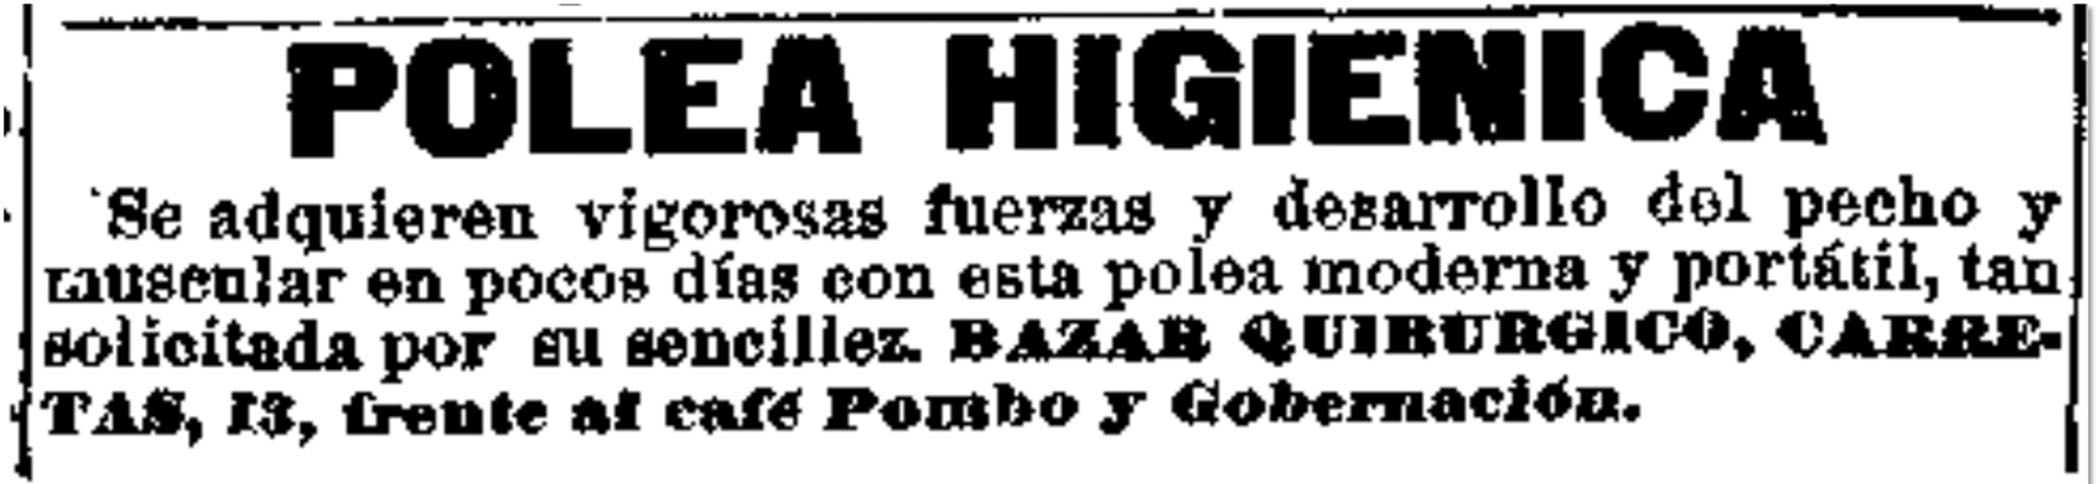 Heraldo de Madrid, 7 de noviembre de 1904, p. 4